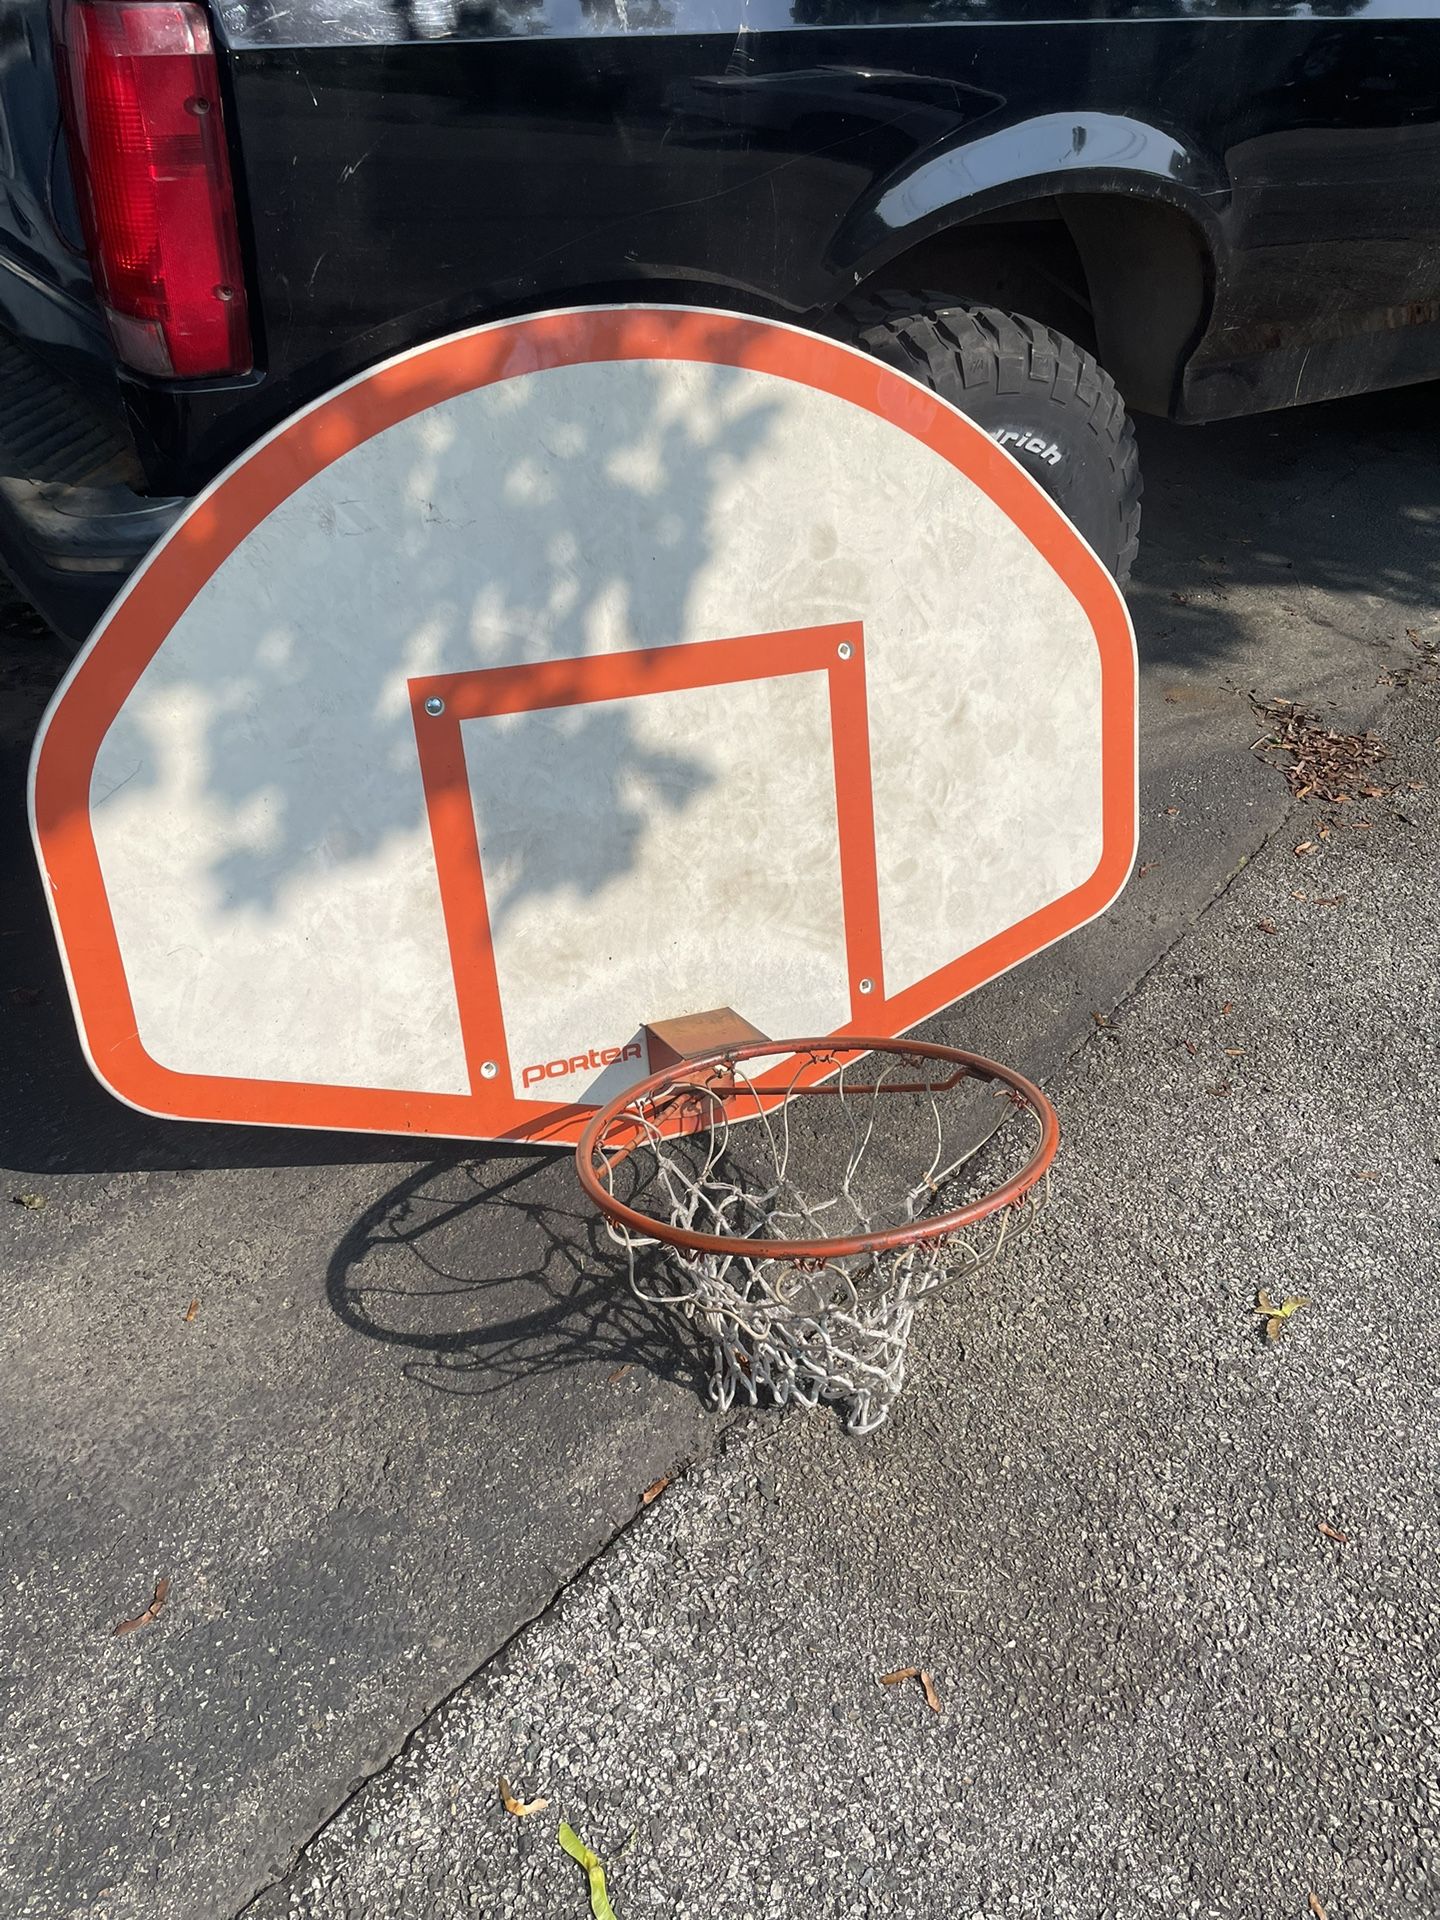 Porter Full Sized Basketbal Hoop And Backboard